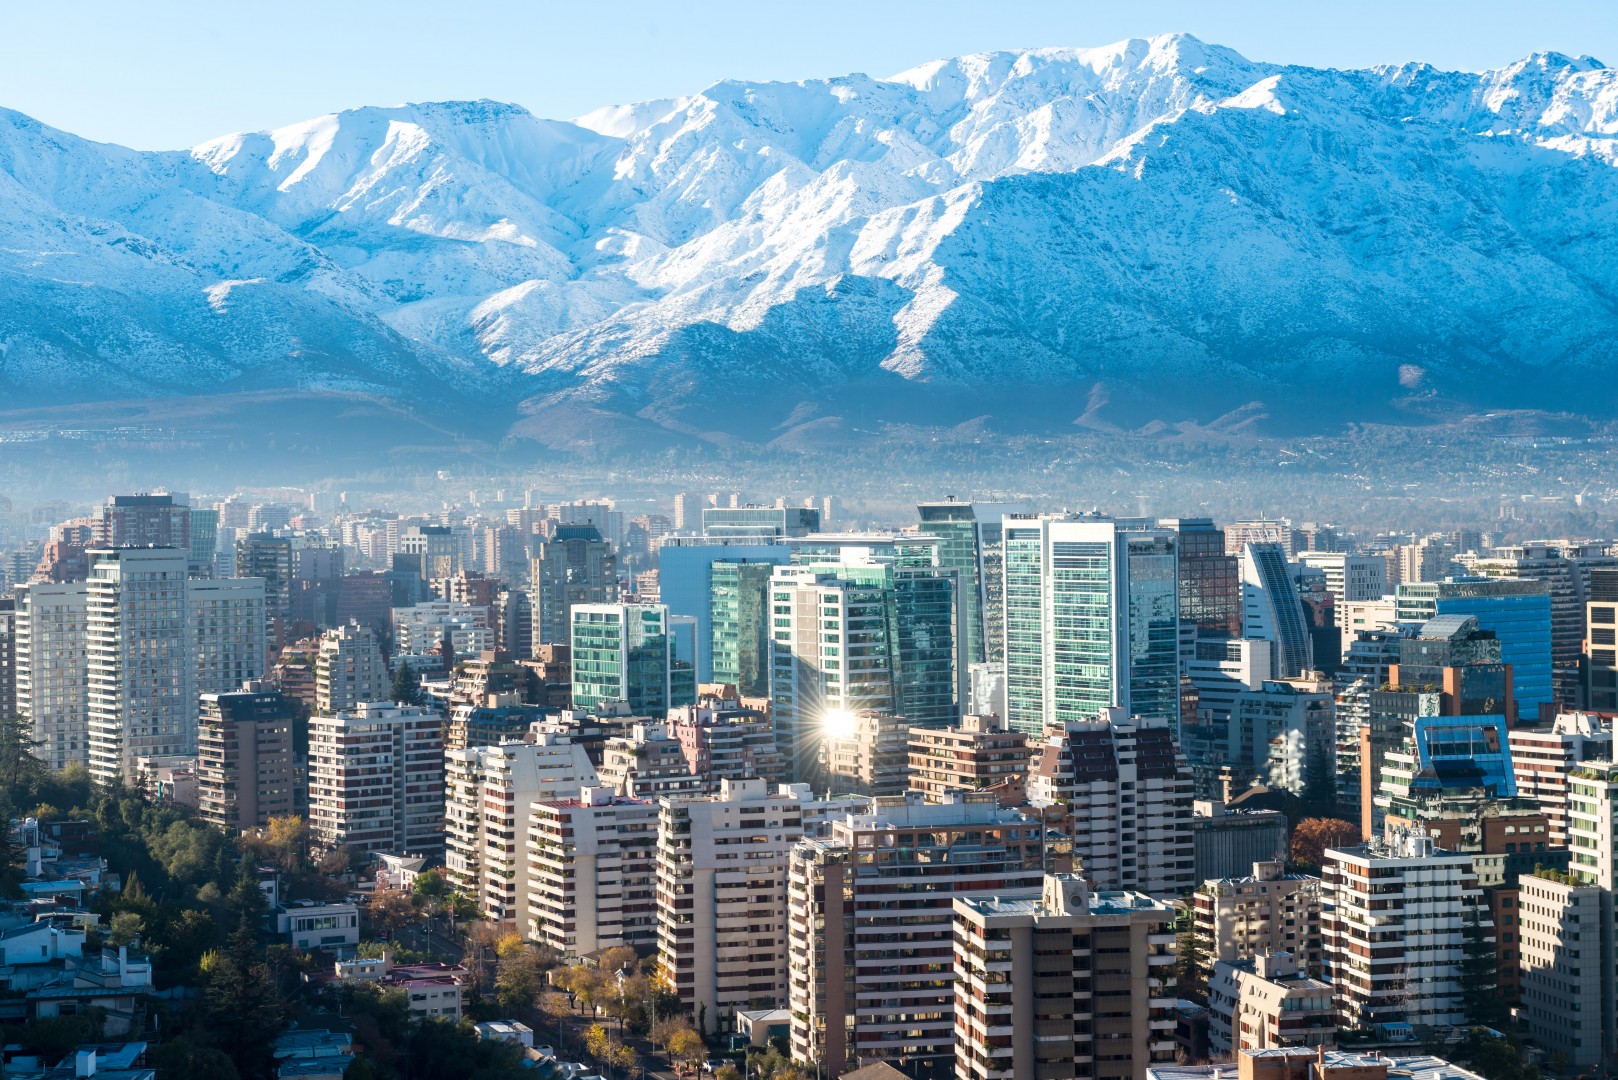 Temperate Mediterranean climate in Santiago de Chile